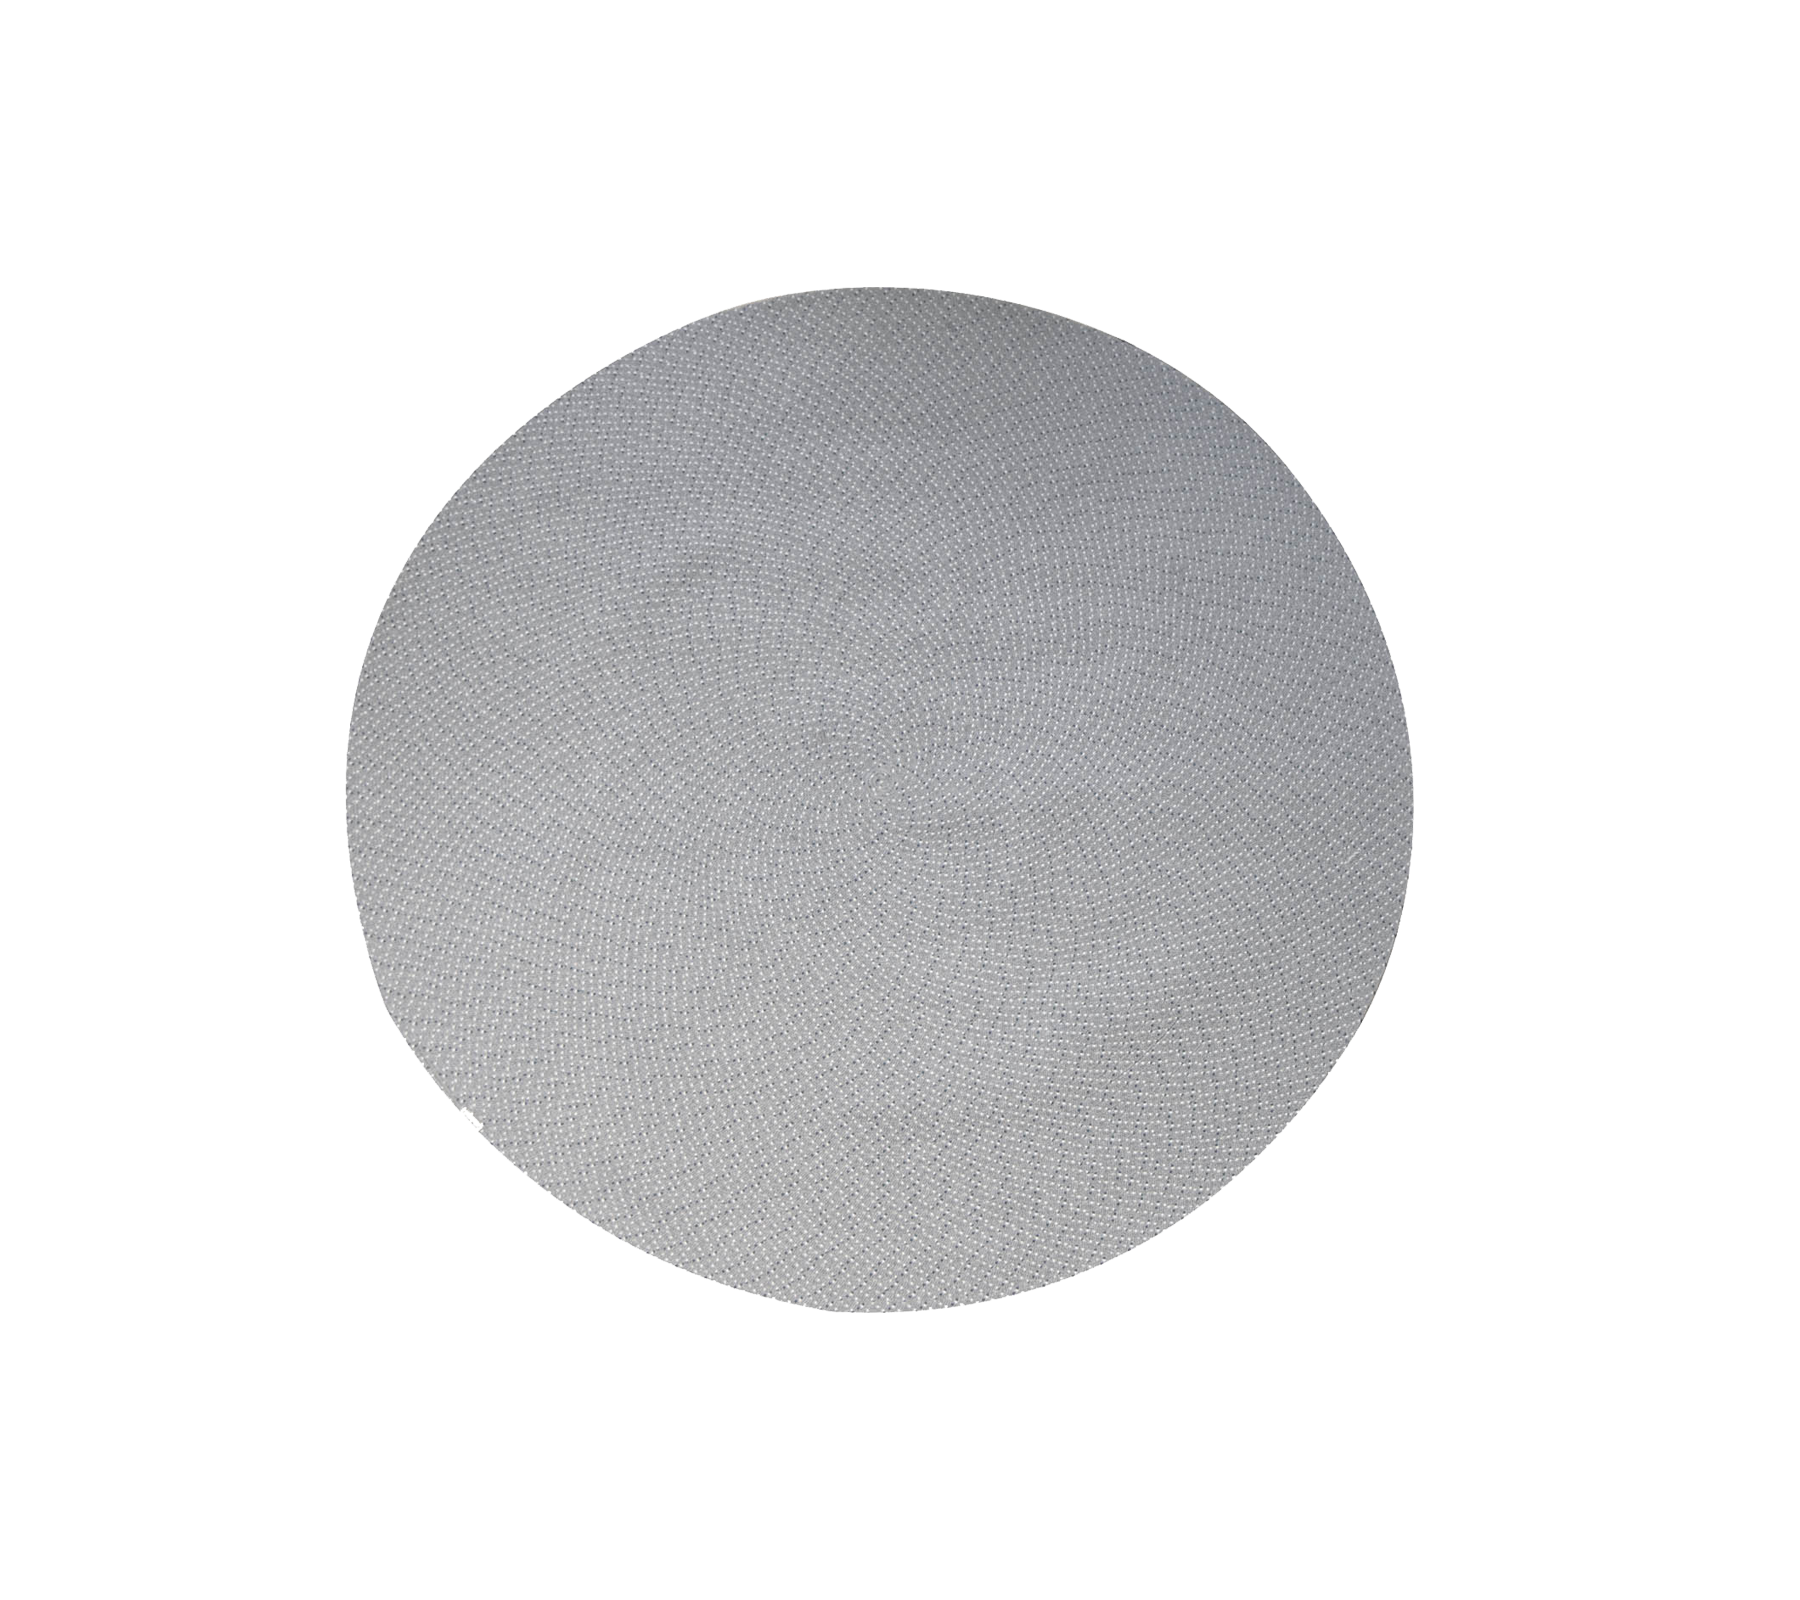 Cane-Line - Dot rug, dia 78.74 inches